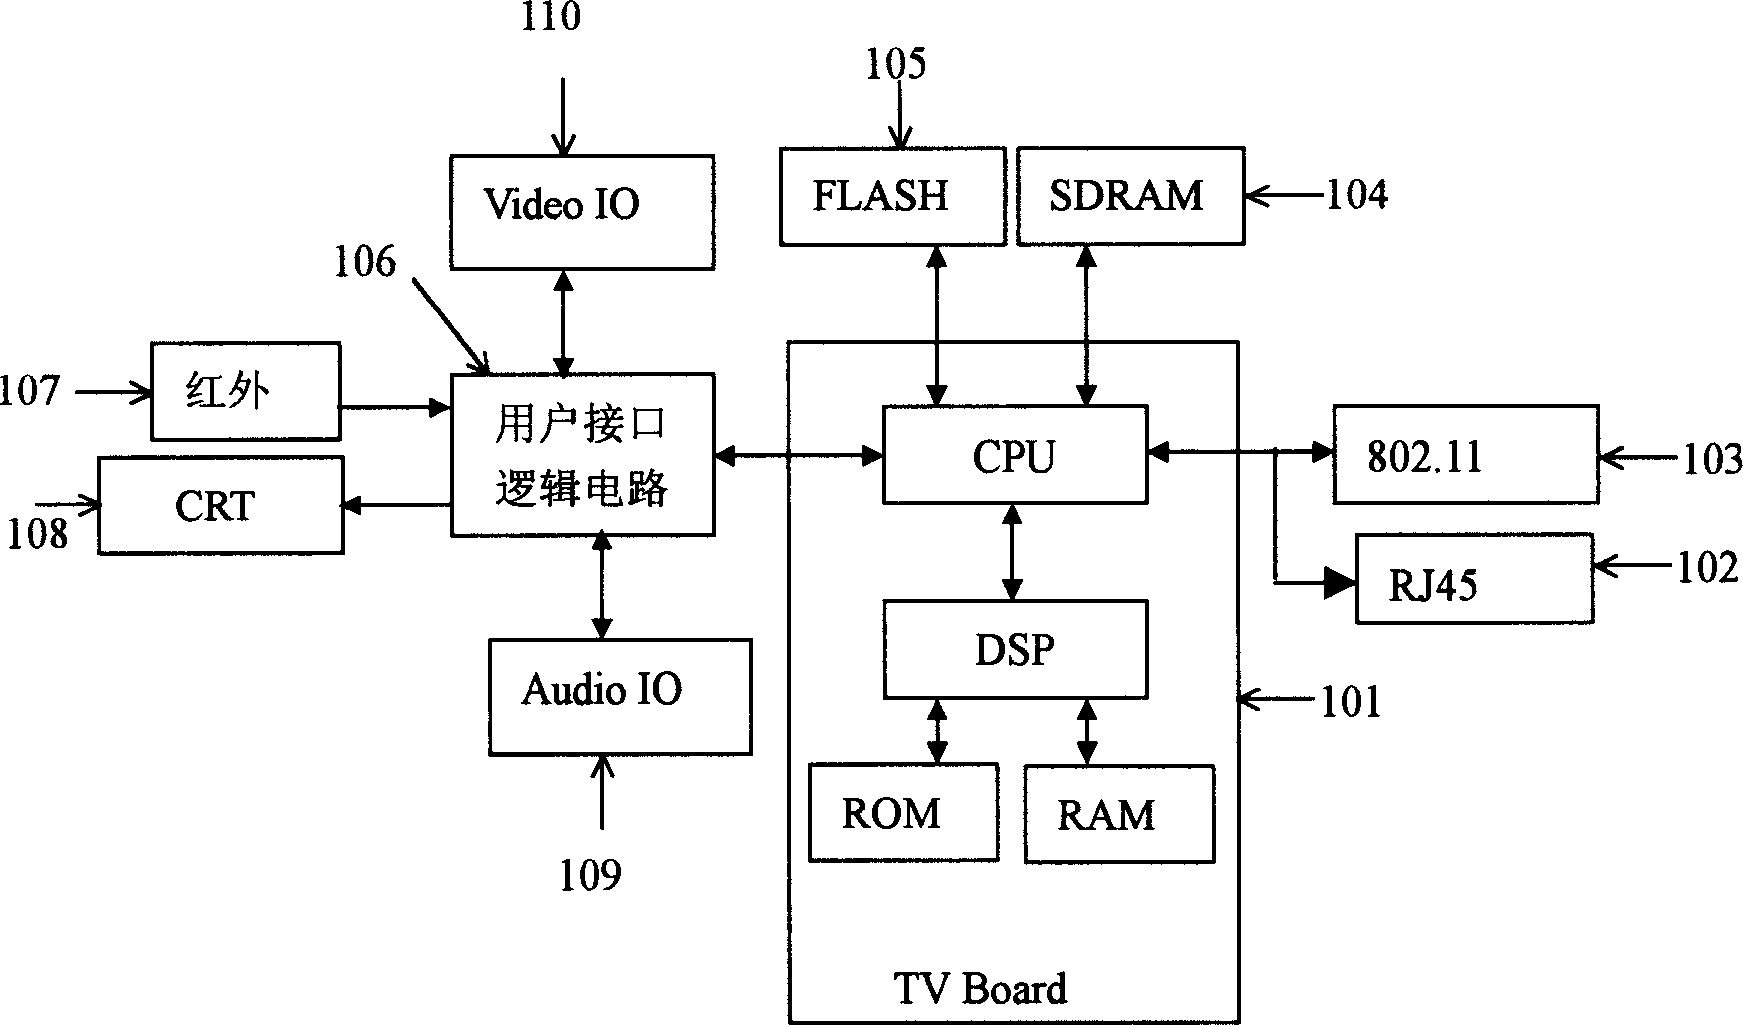 Network multi-media TV. set based on UPNP protocol